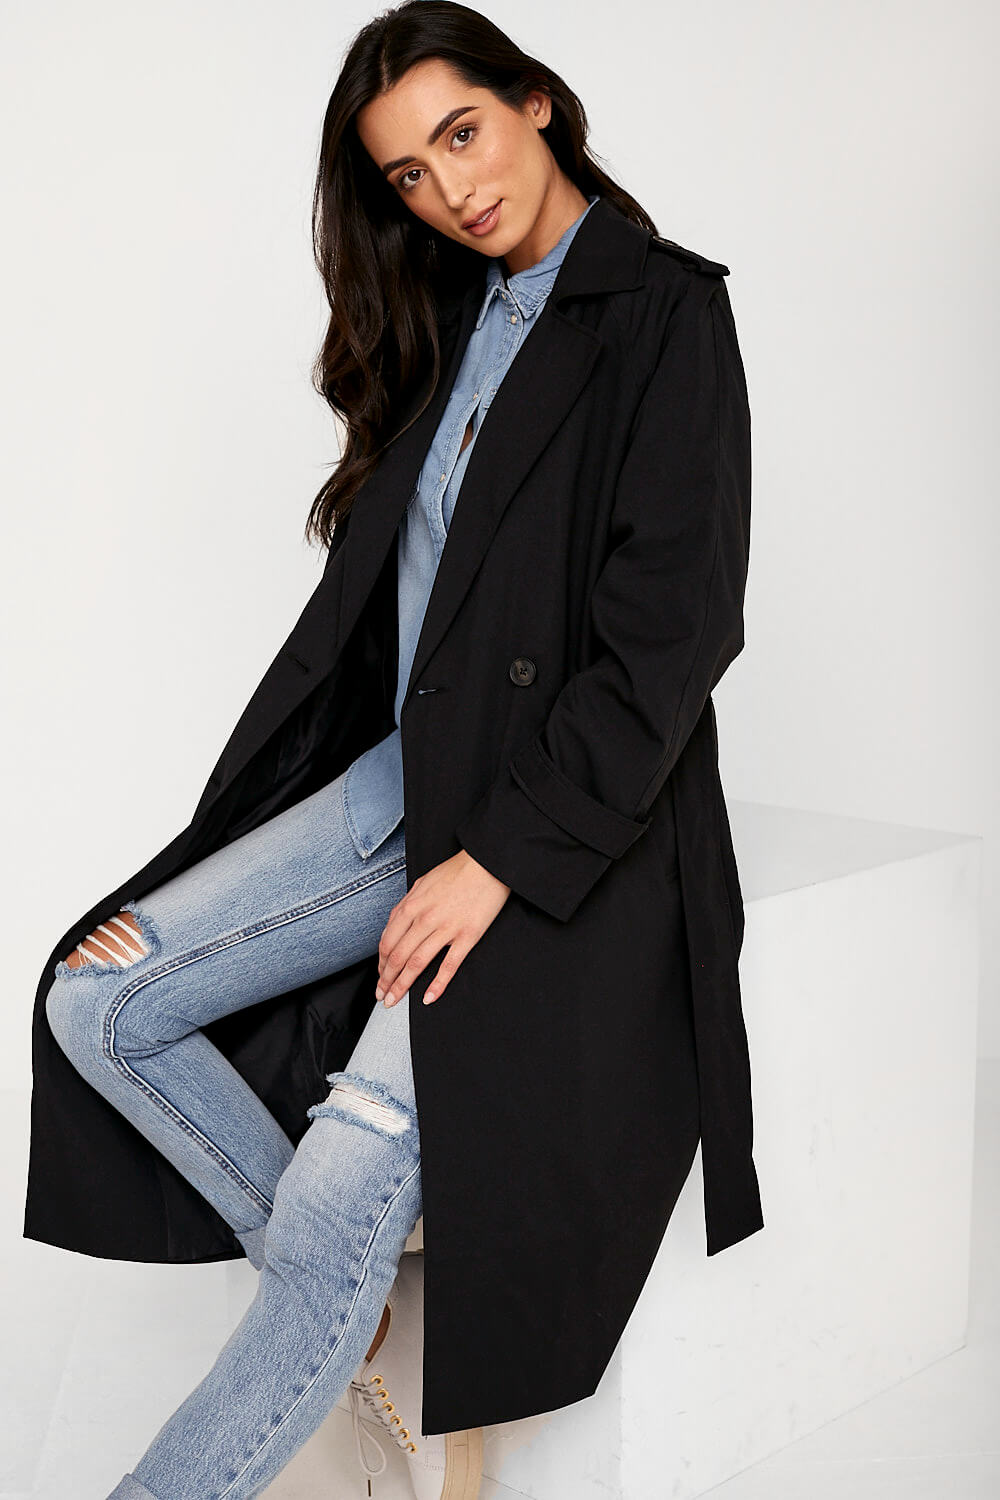 Vero Moda Tessa Long Trenchcoat in Black | iCLOTHING - iCLOTHING